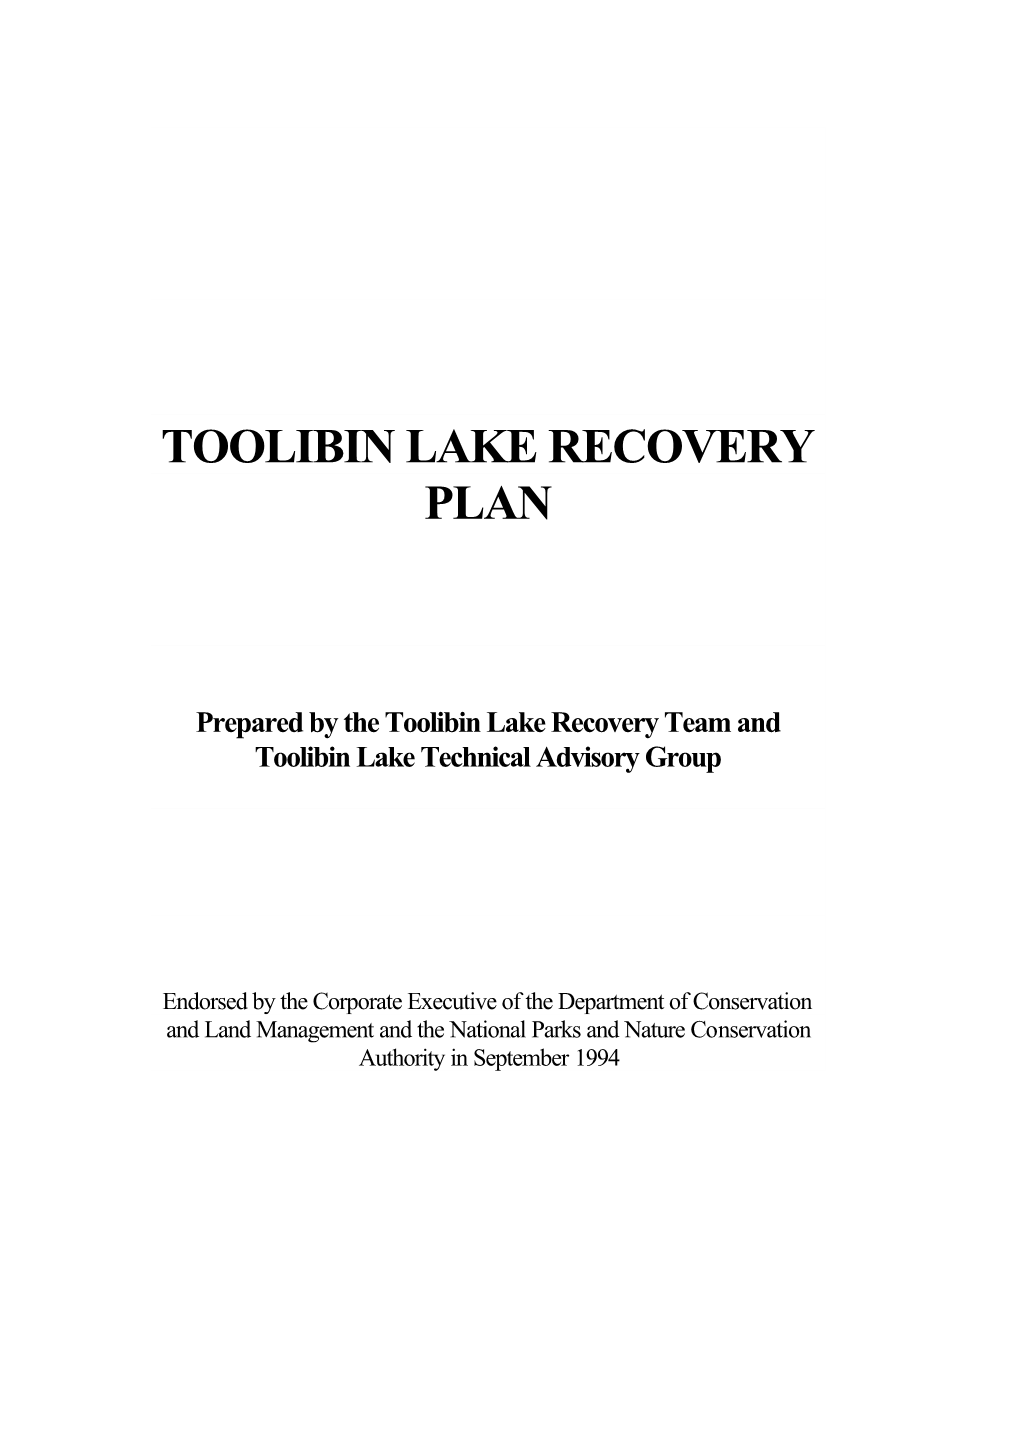 Toolibin Lake Recovery Plan